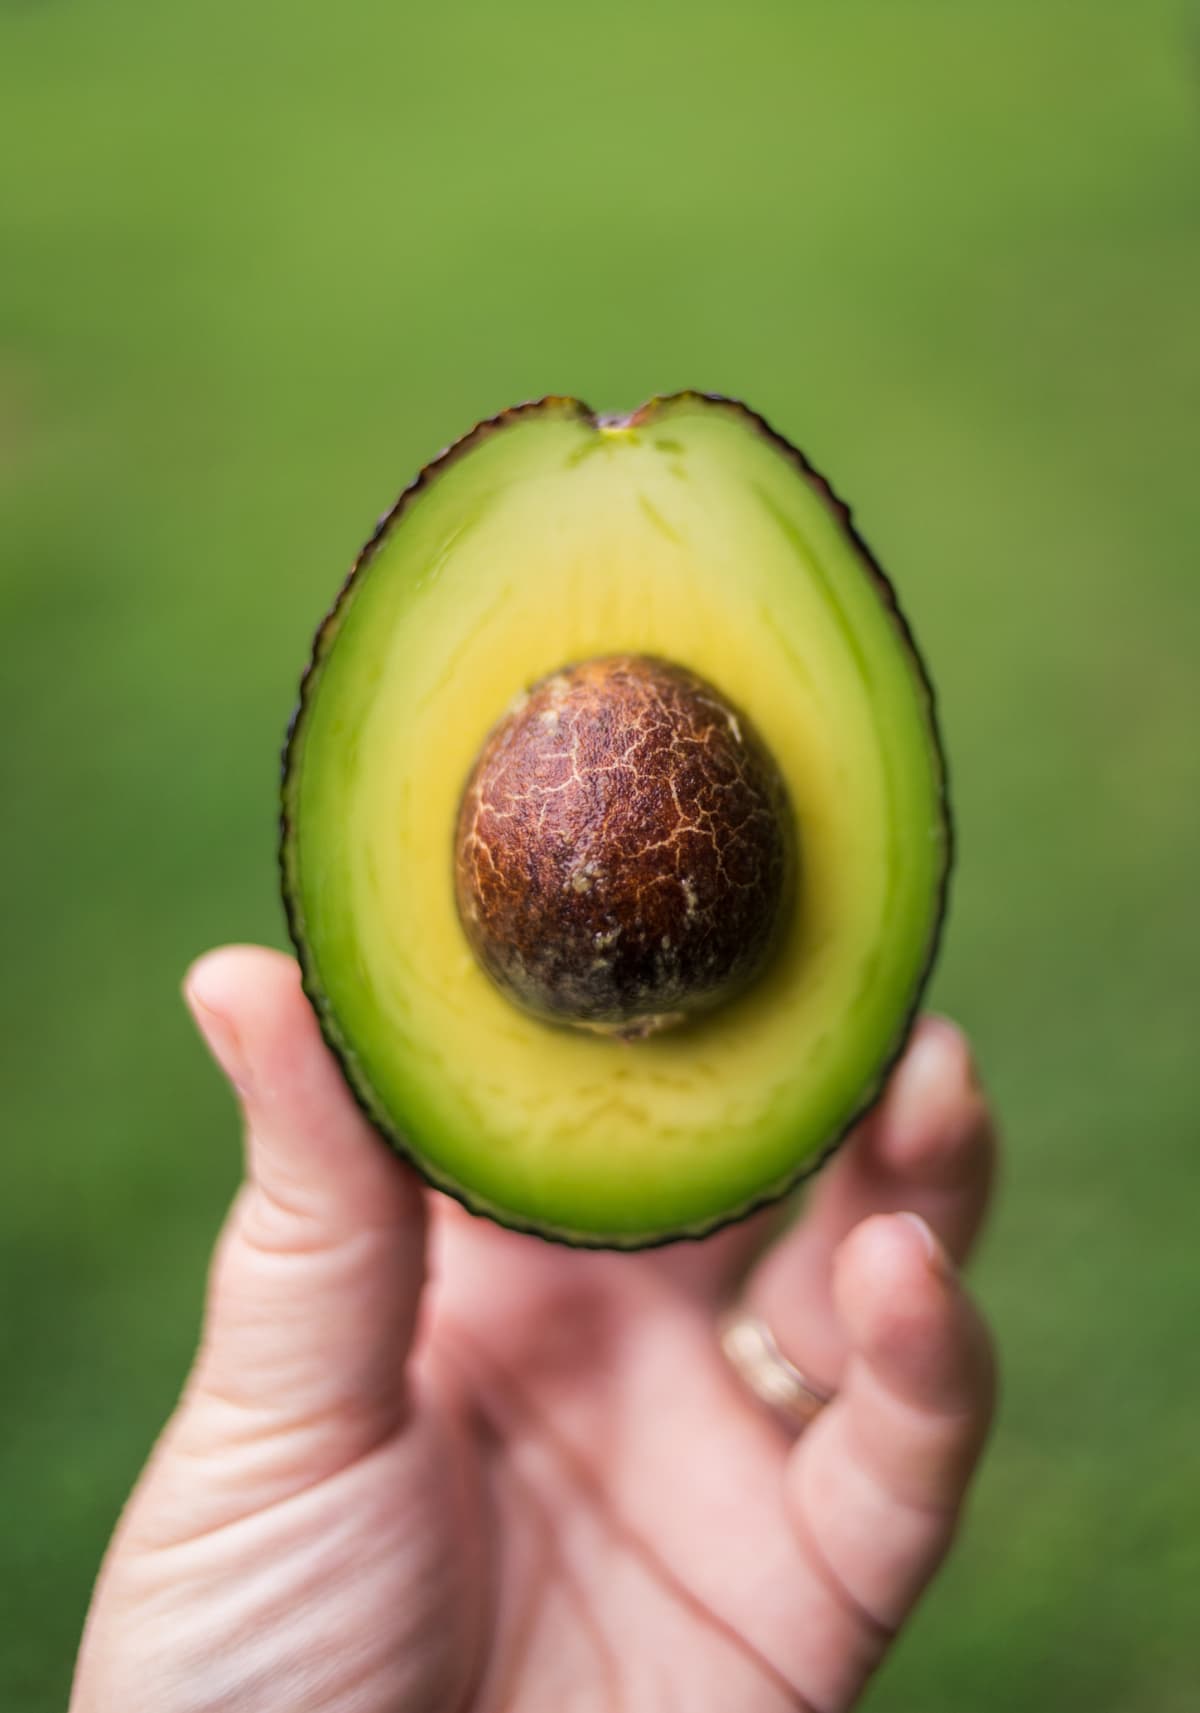 Hand holding an avocado